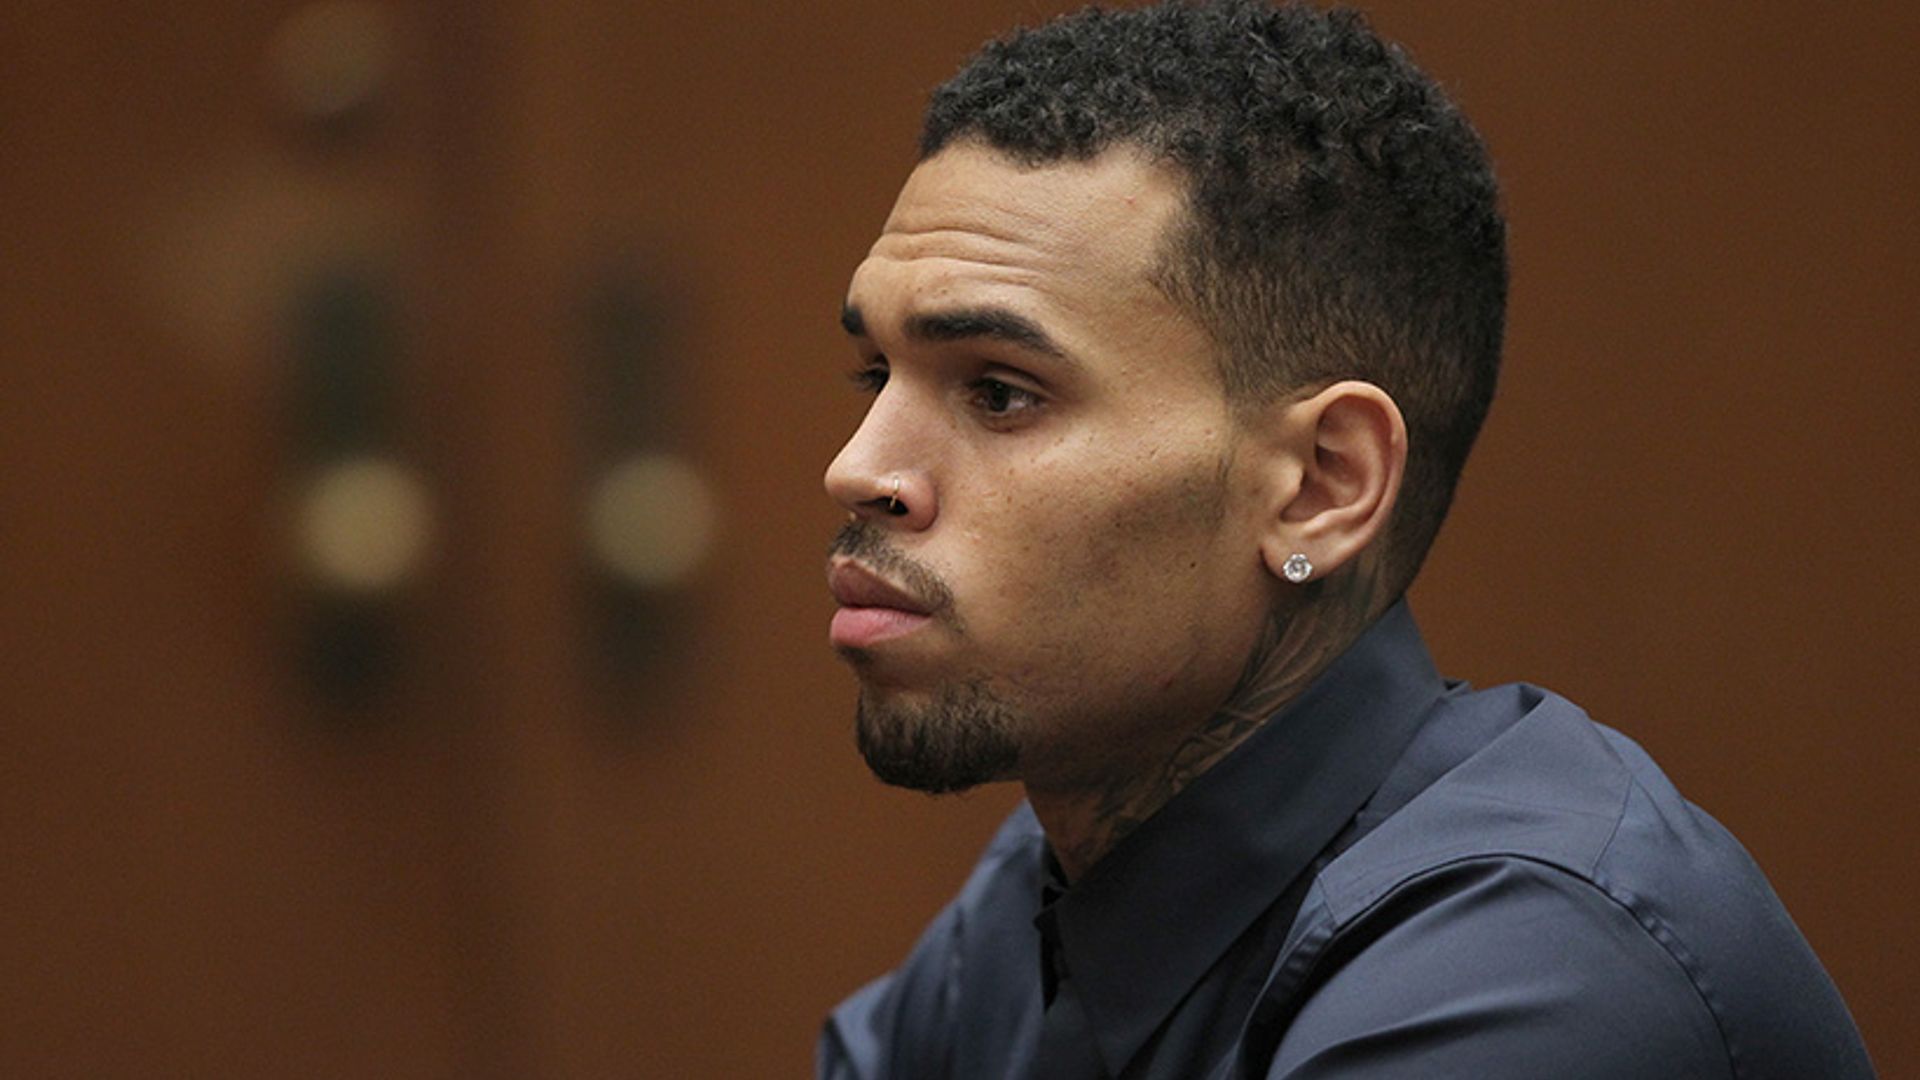 Chris Brown recalls the night he physically assaulted Rihanna